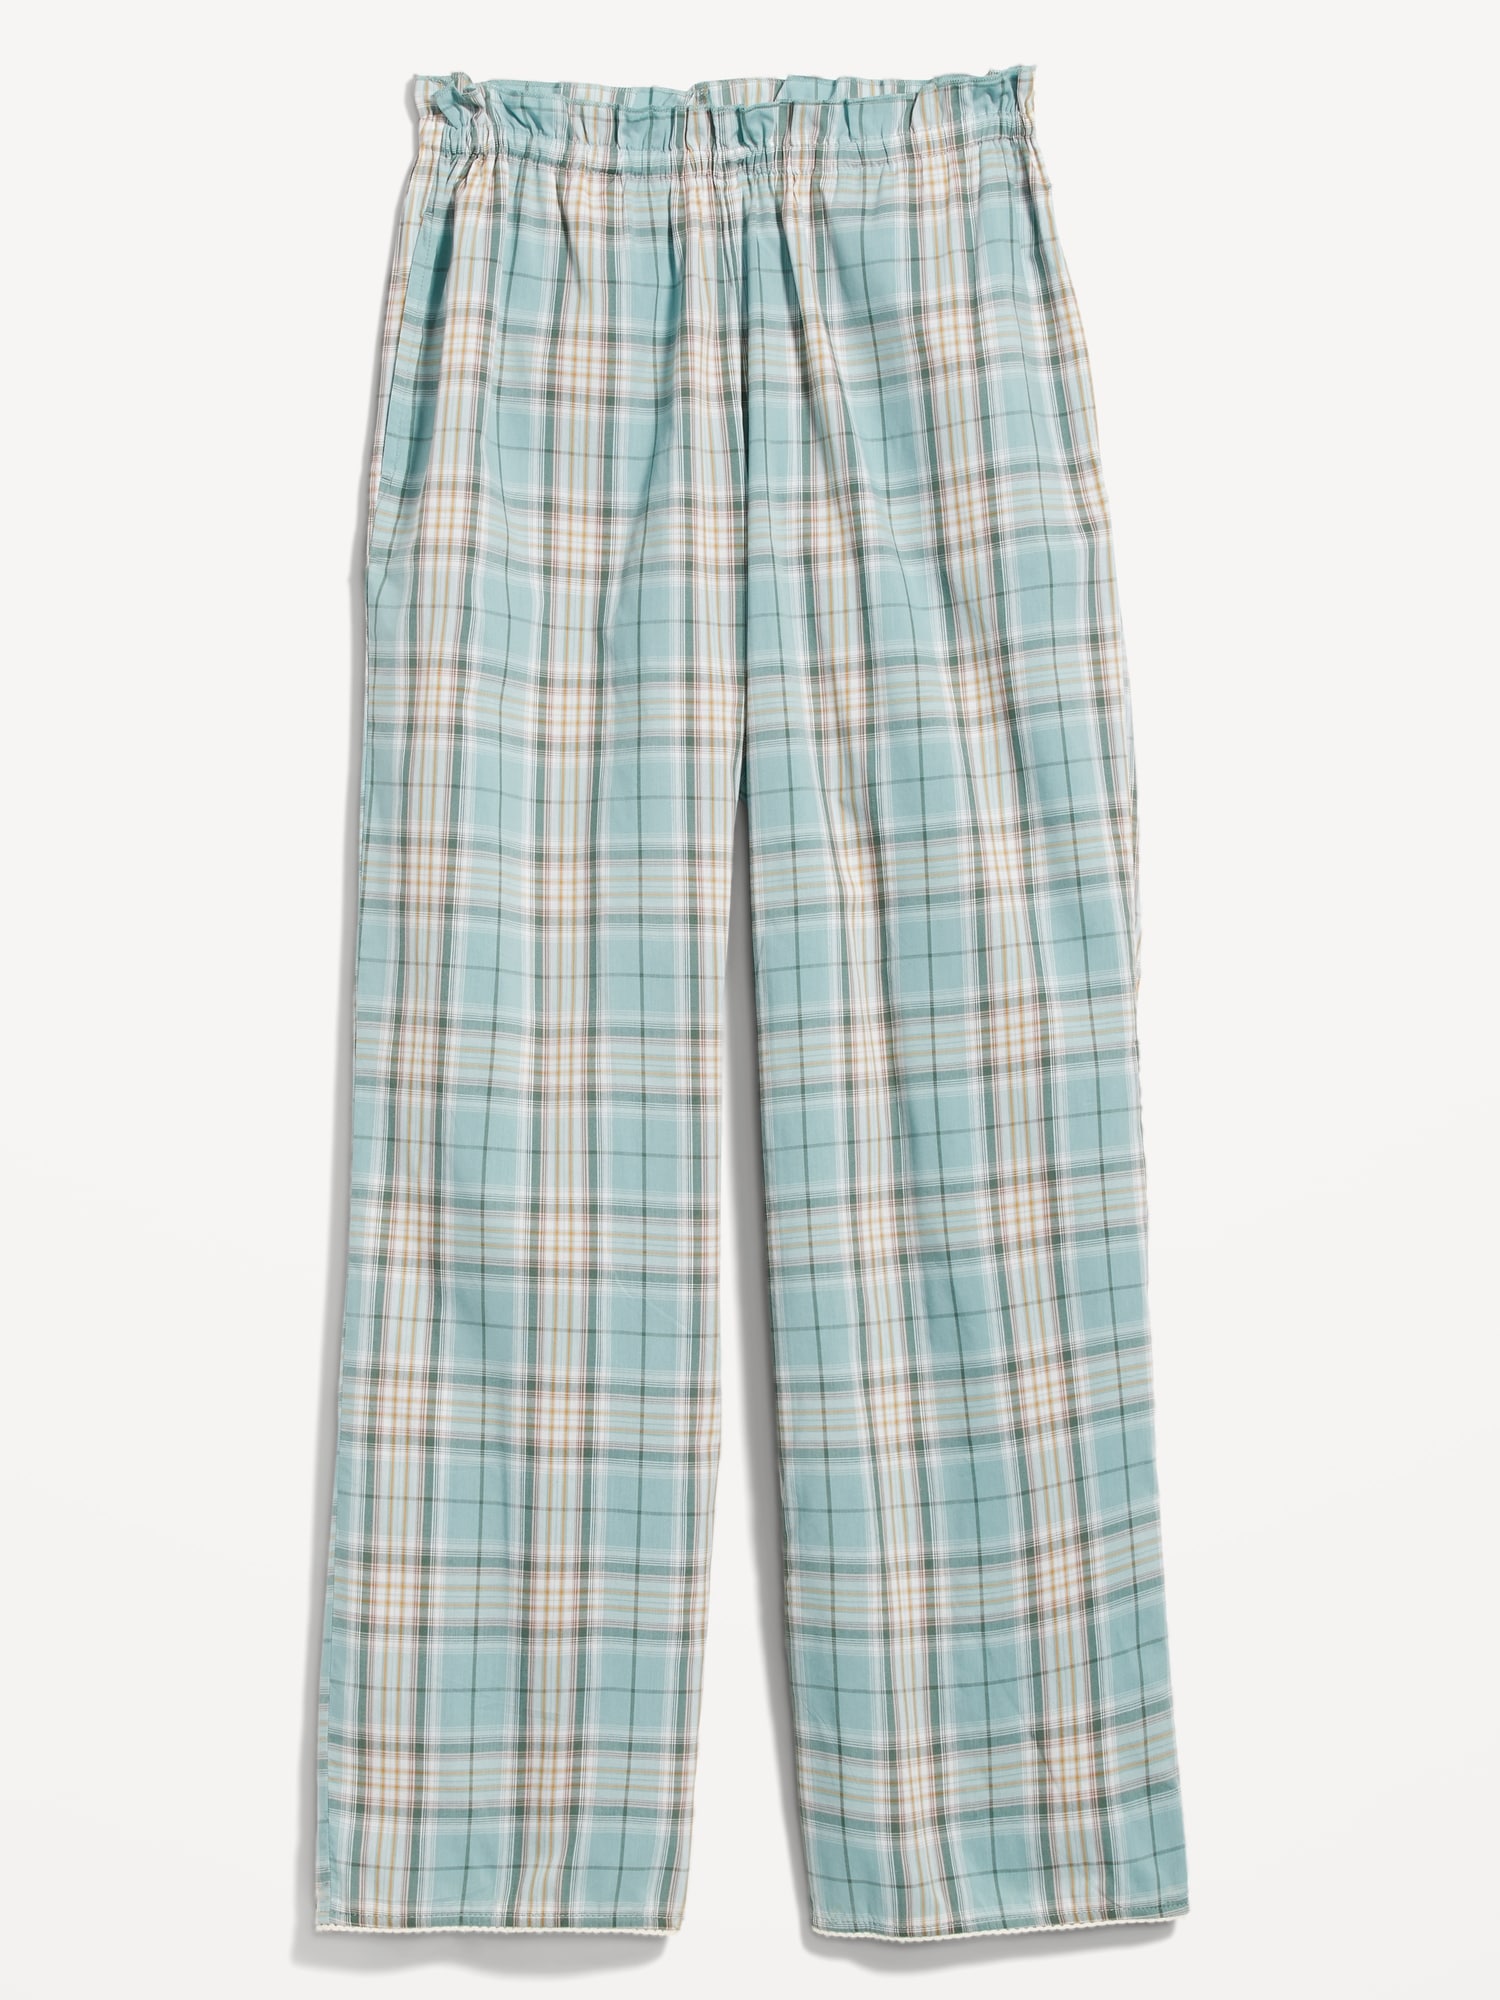 High-Waisted Striped Pajama Pants | Old Navy